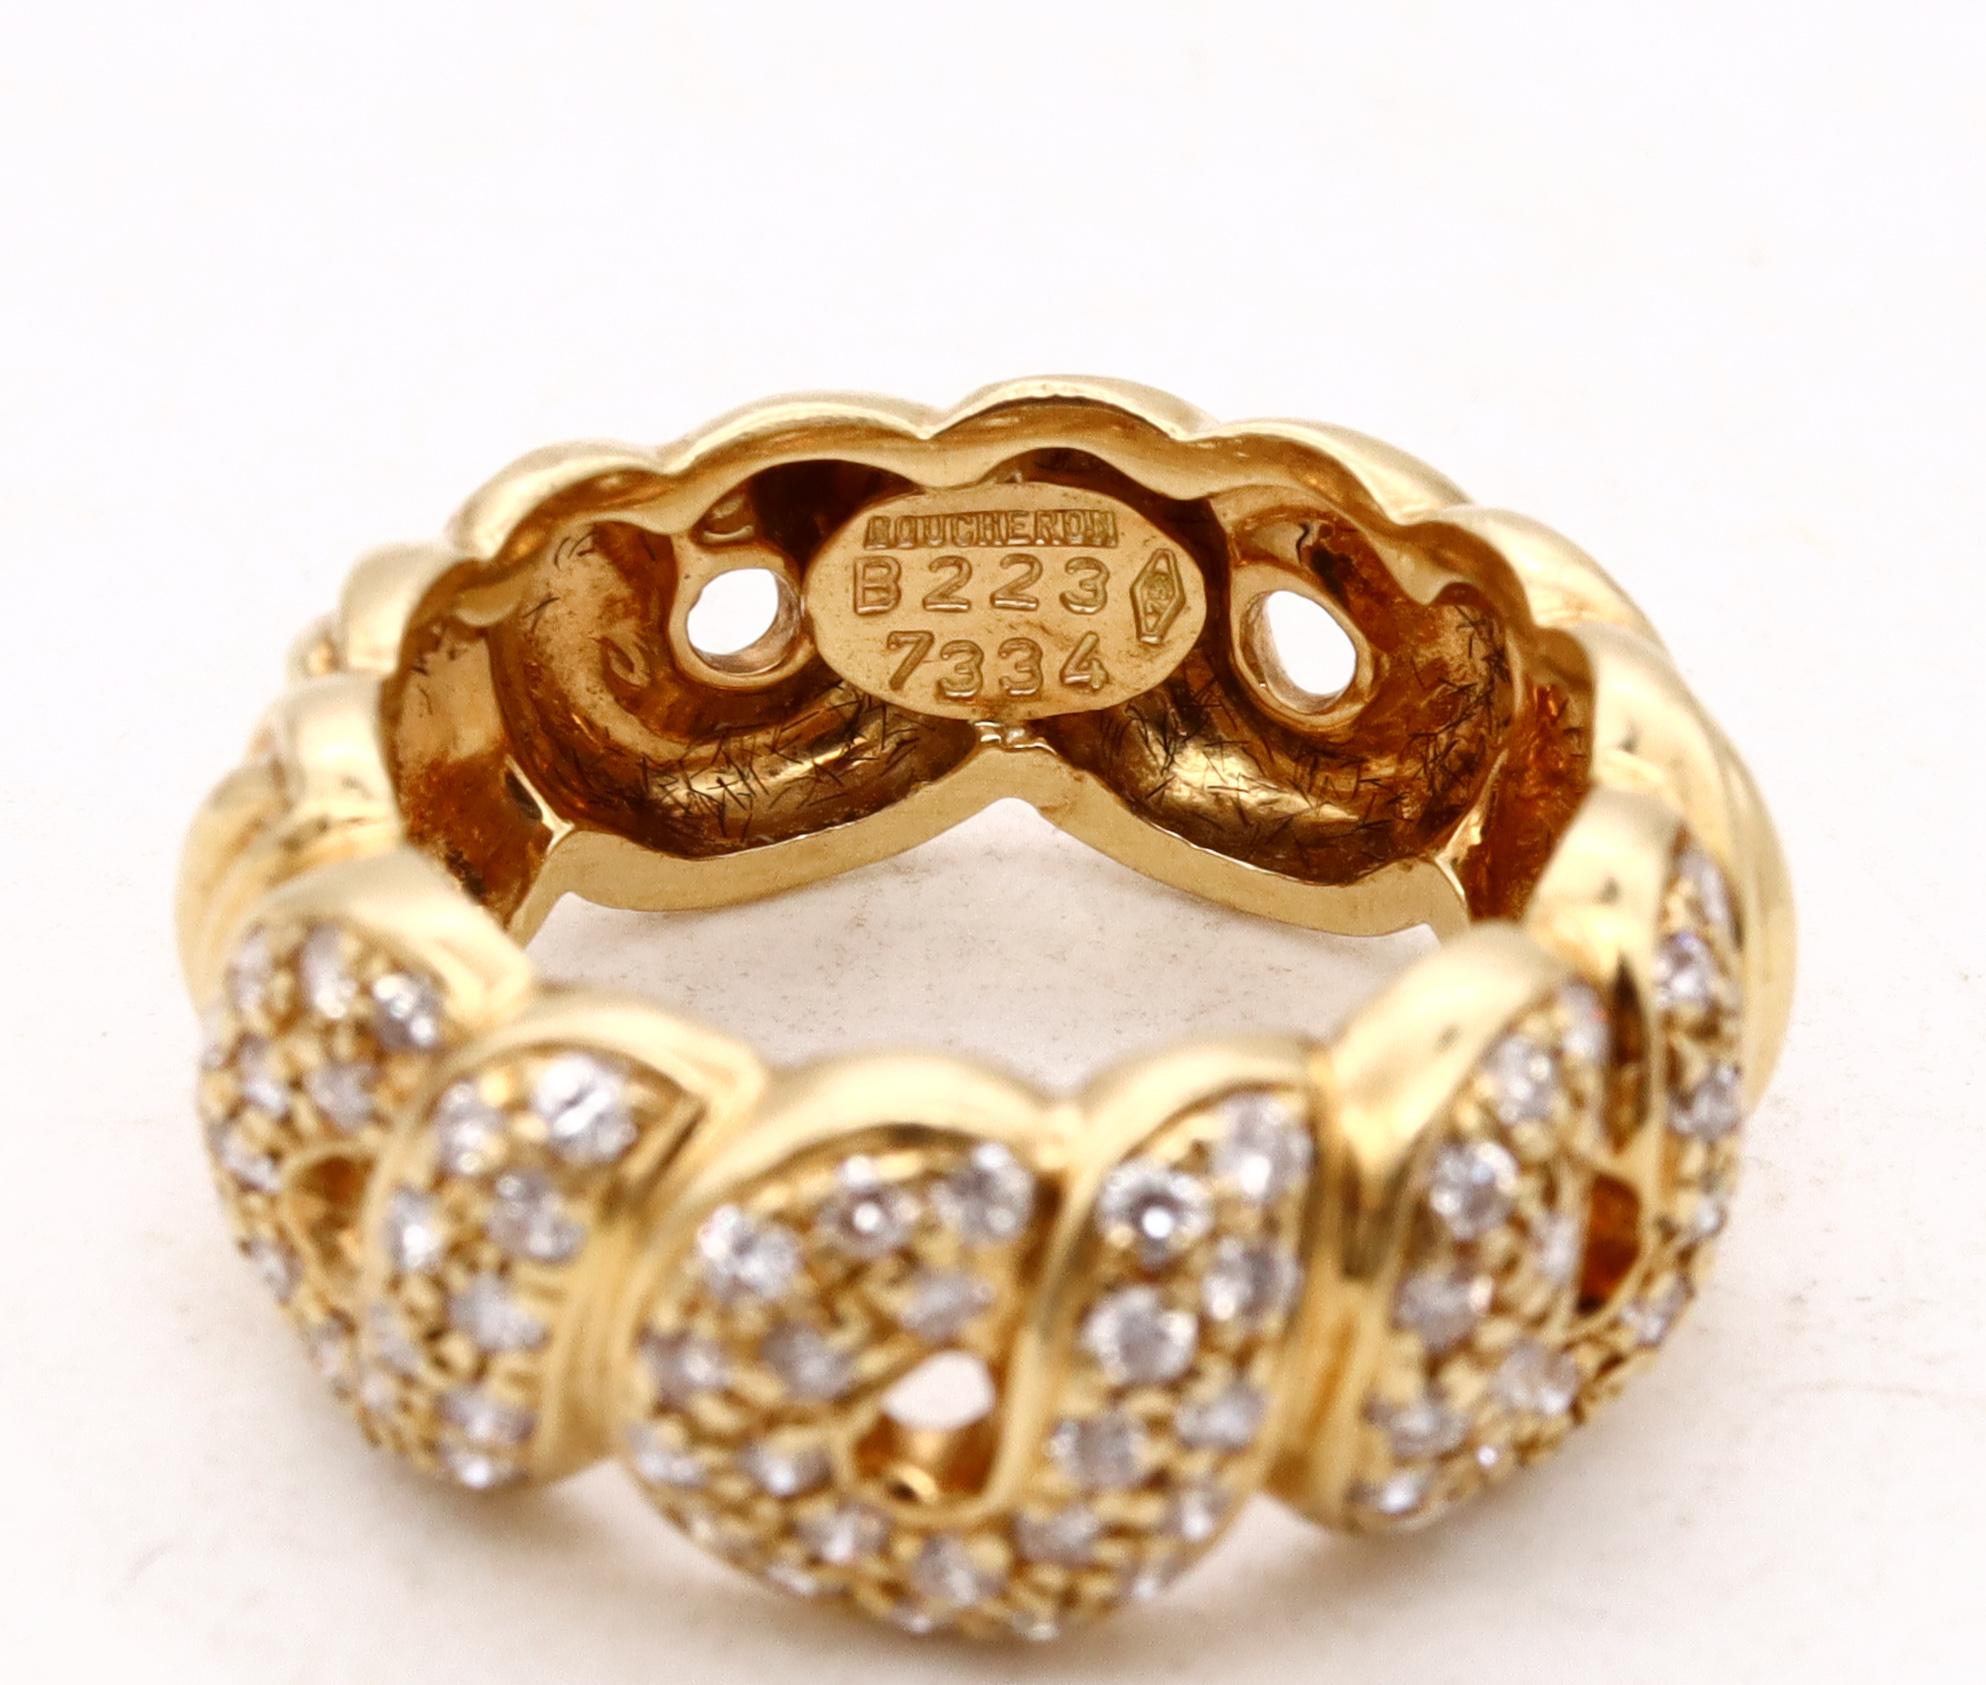 Modernist Boucheron Paris Vintage Band Ring in 18Kt Yellow Gold with VVS Round Diamonds